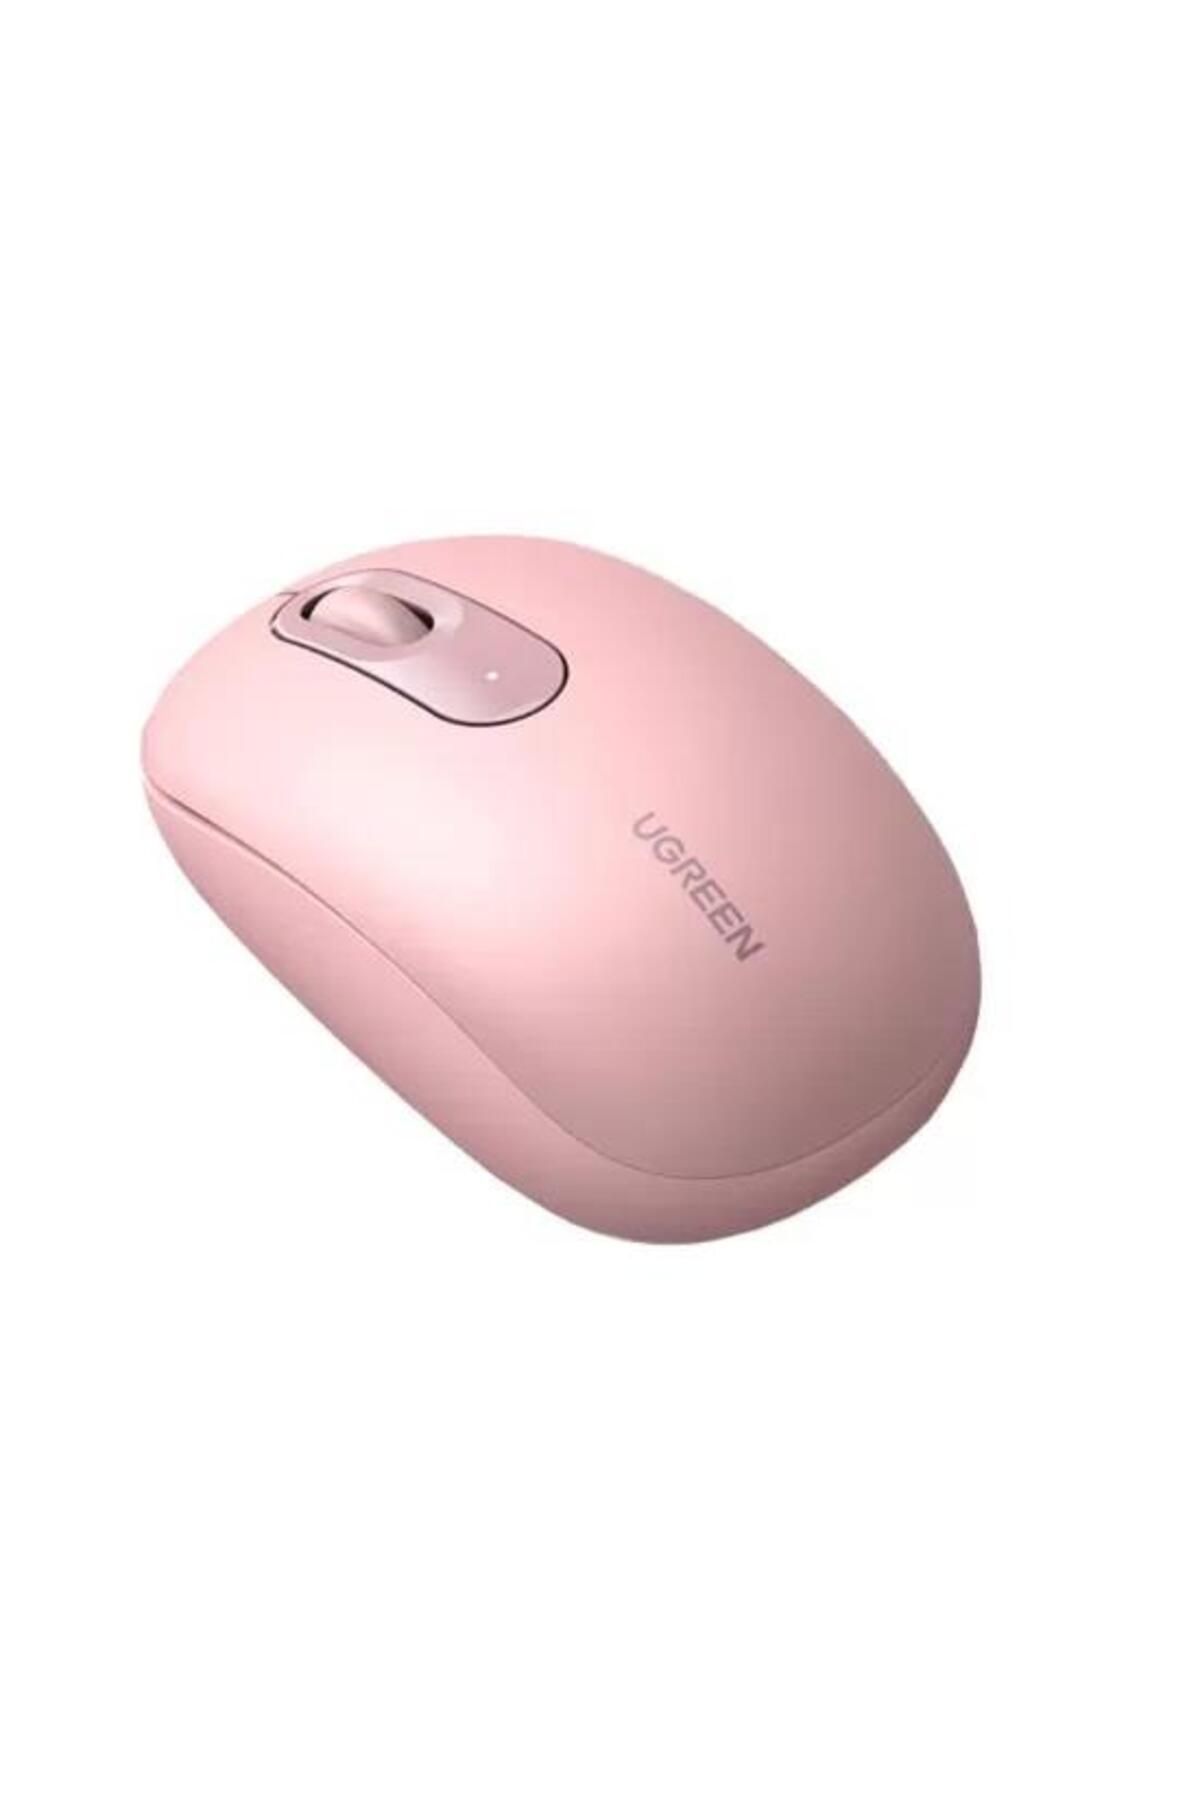 Ugreen 2400dpı 2.4ghz Wireless Kablosuz Sessiz Mouse Pembe